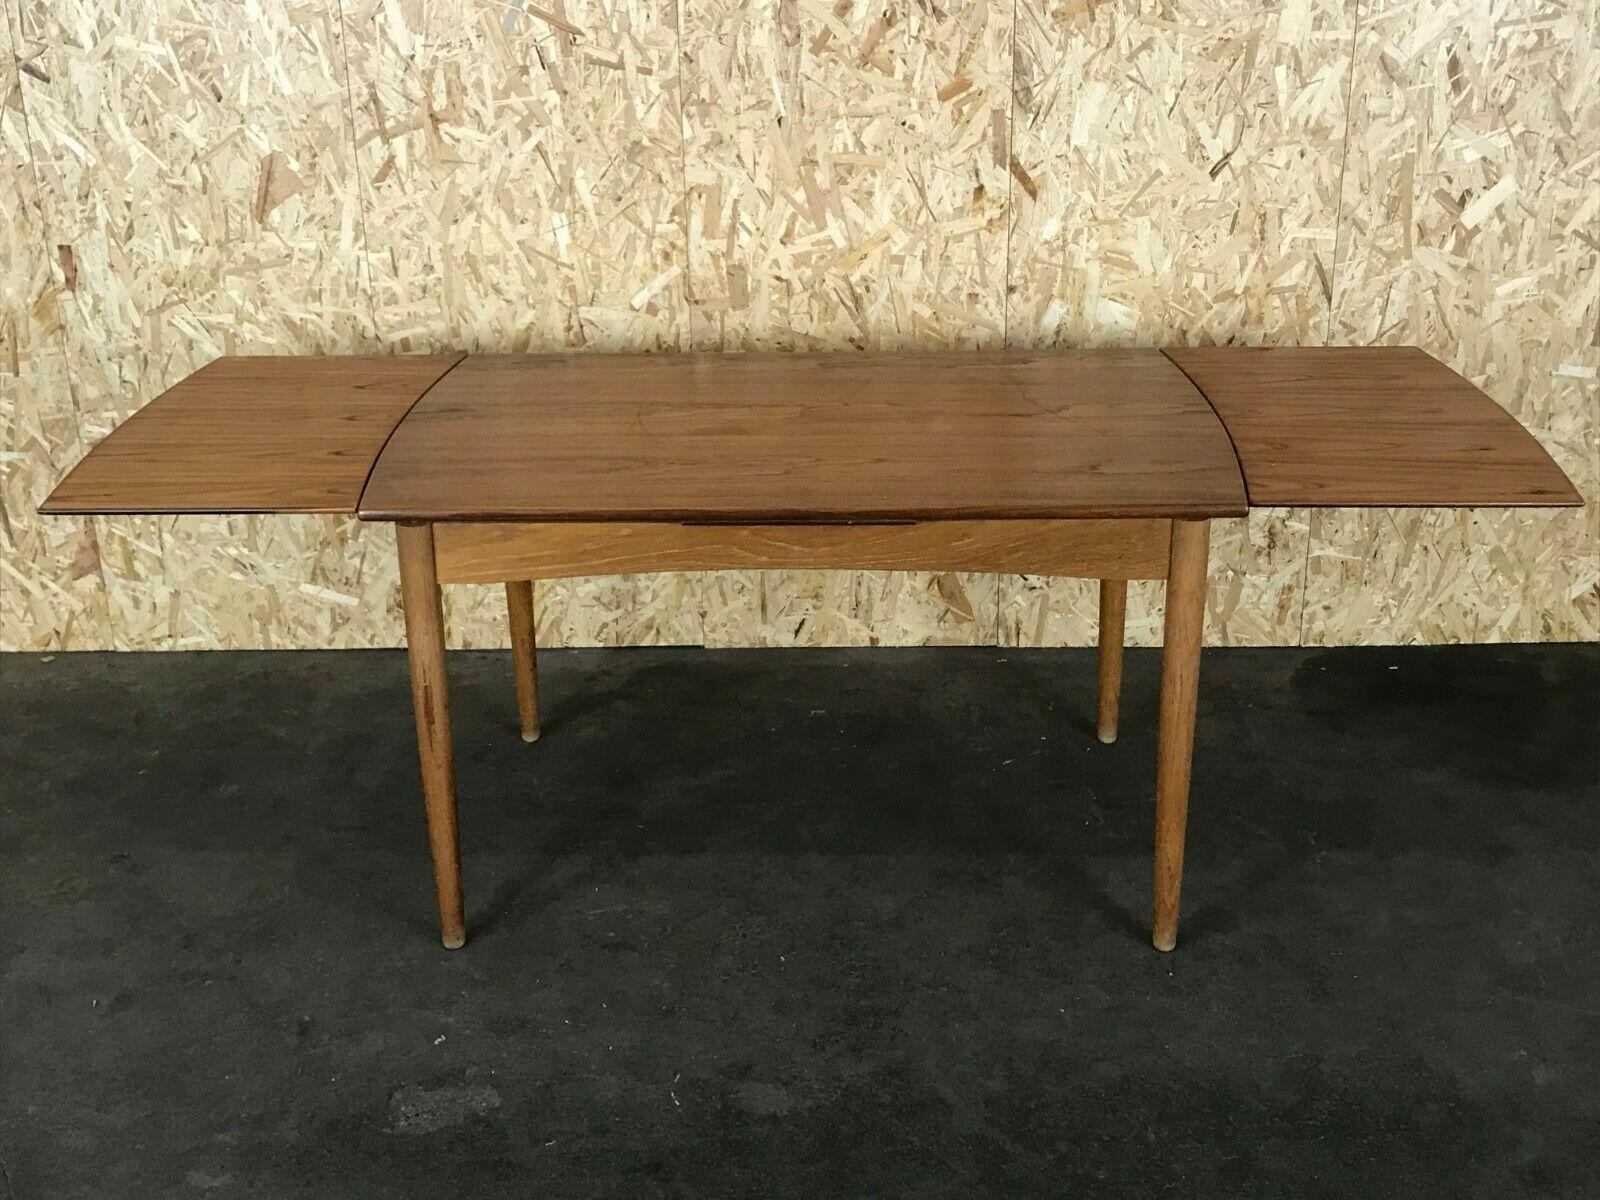 60s 70s oak teak dining table Danish Modern Design Denmark 60s

Object: dining table / dining table

Manufacturer:

Condition: good - vintage

Age: around 1960-1970

Dimensions:

(+ 2x 45cm) 129.5cm x 83cm x 75cm

Other notes:

The